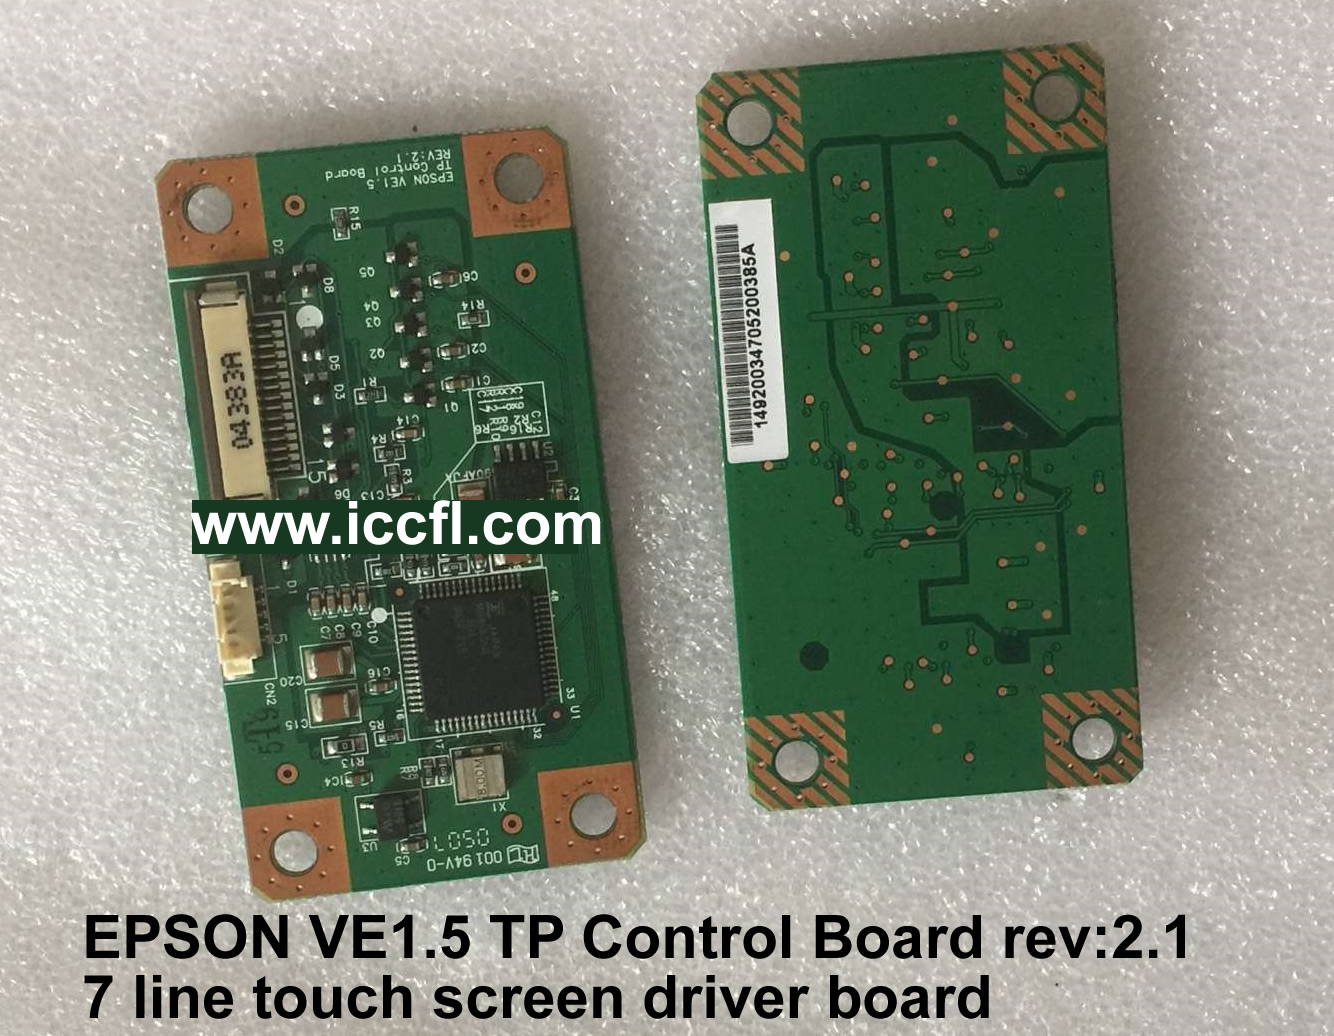 EPSON VE1.5 TP Control Board rev:2.1 7 line touch screen driver board